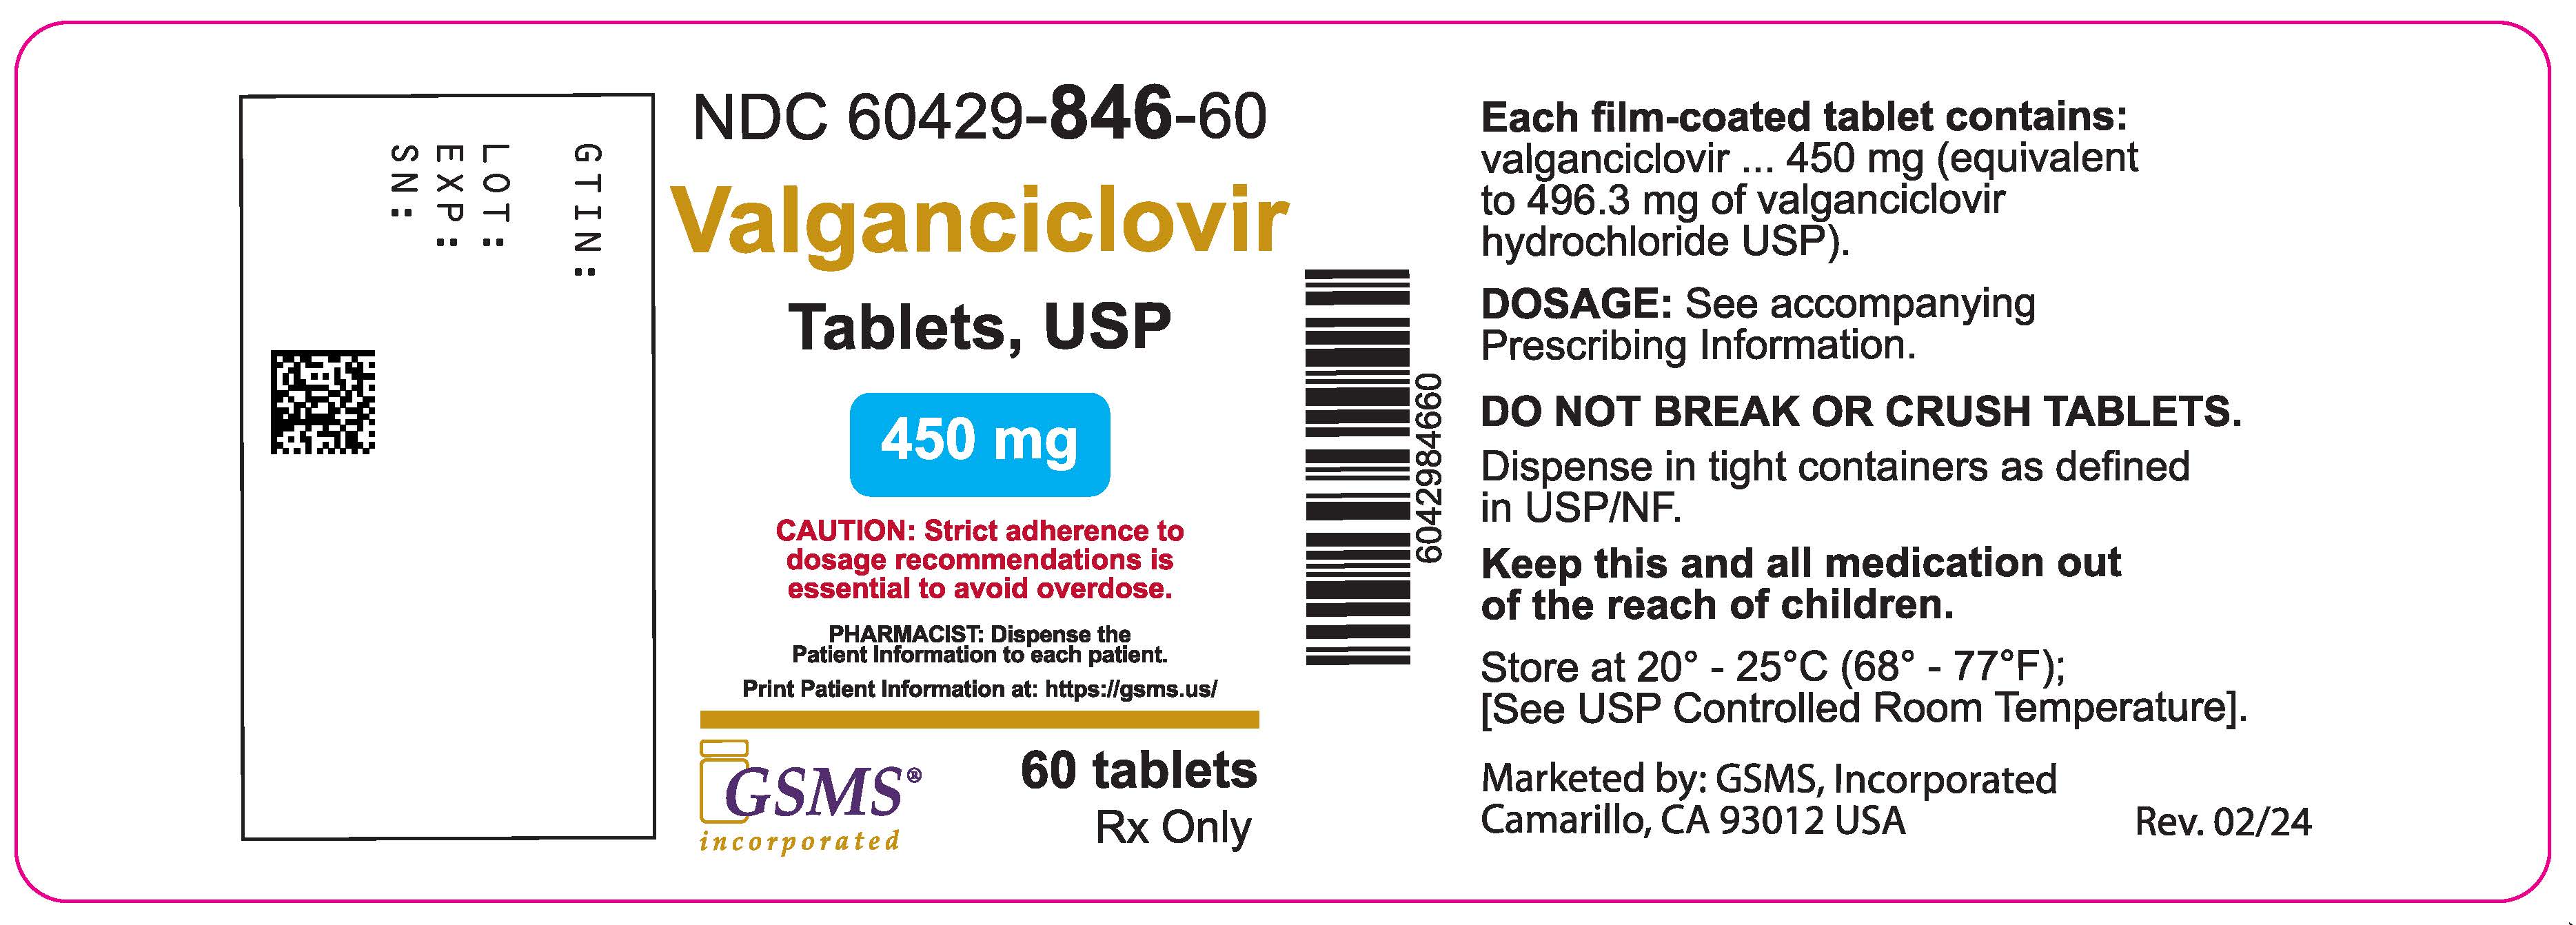 60429-846-60OL - Valganciclovir 450 mg - Rev. 0224.jpg